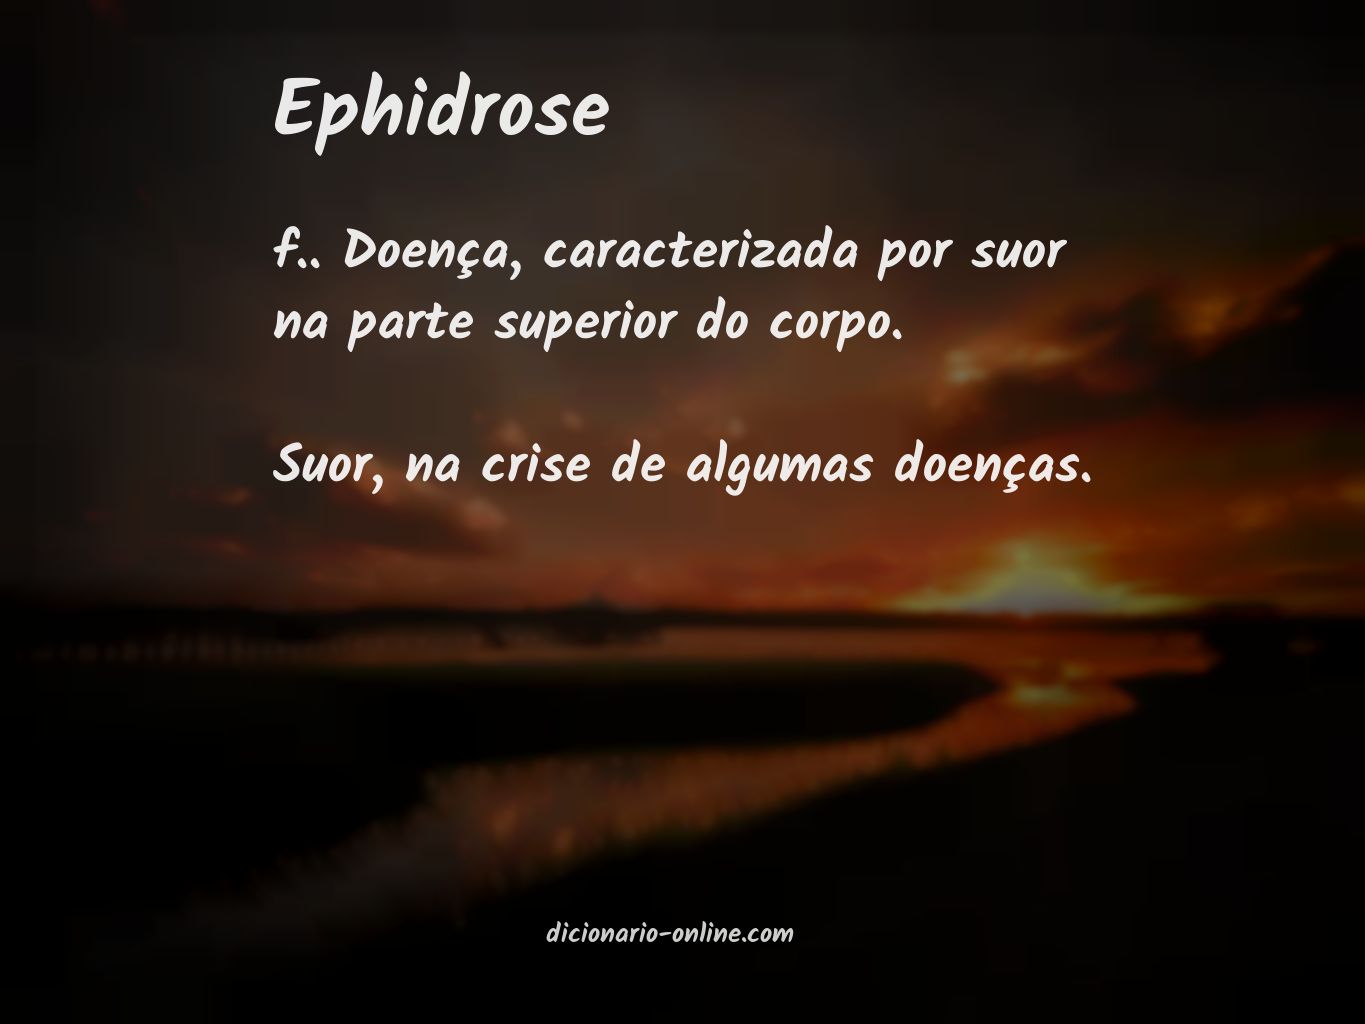 Significado de ephidrose